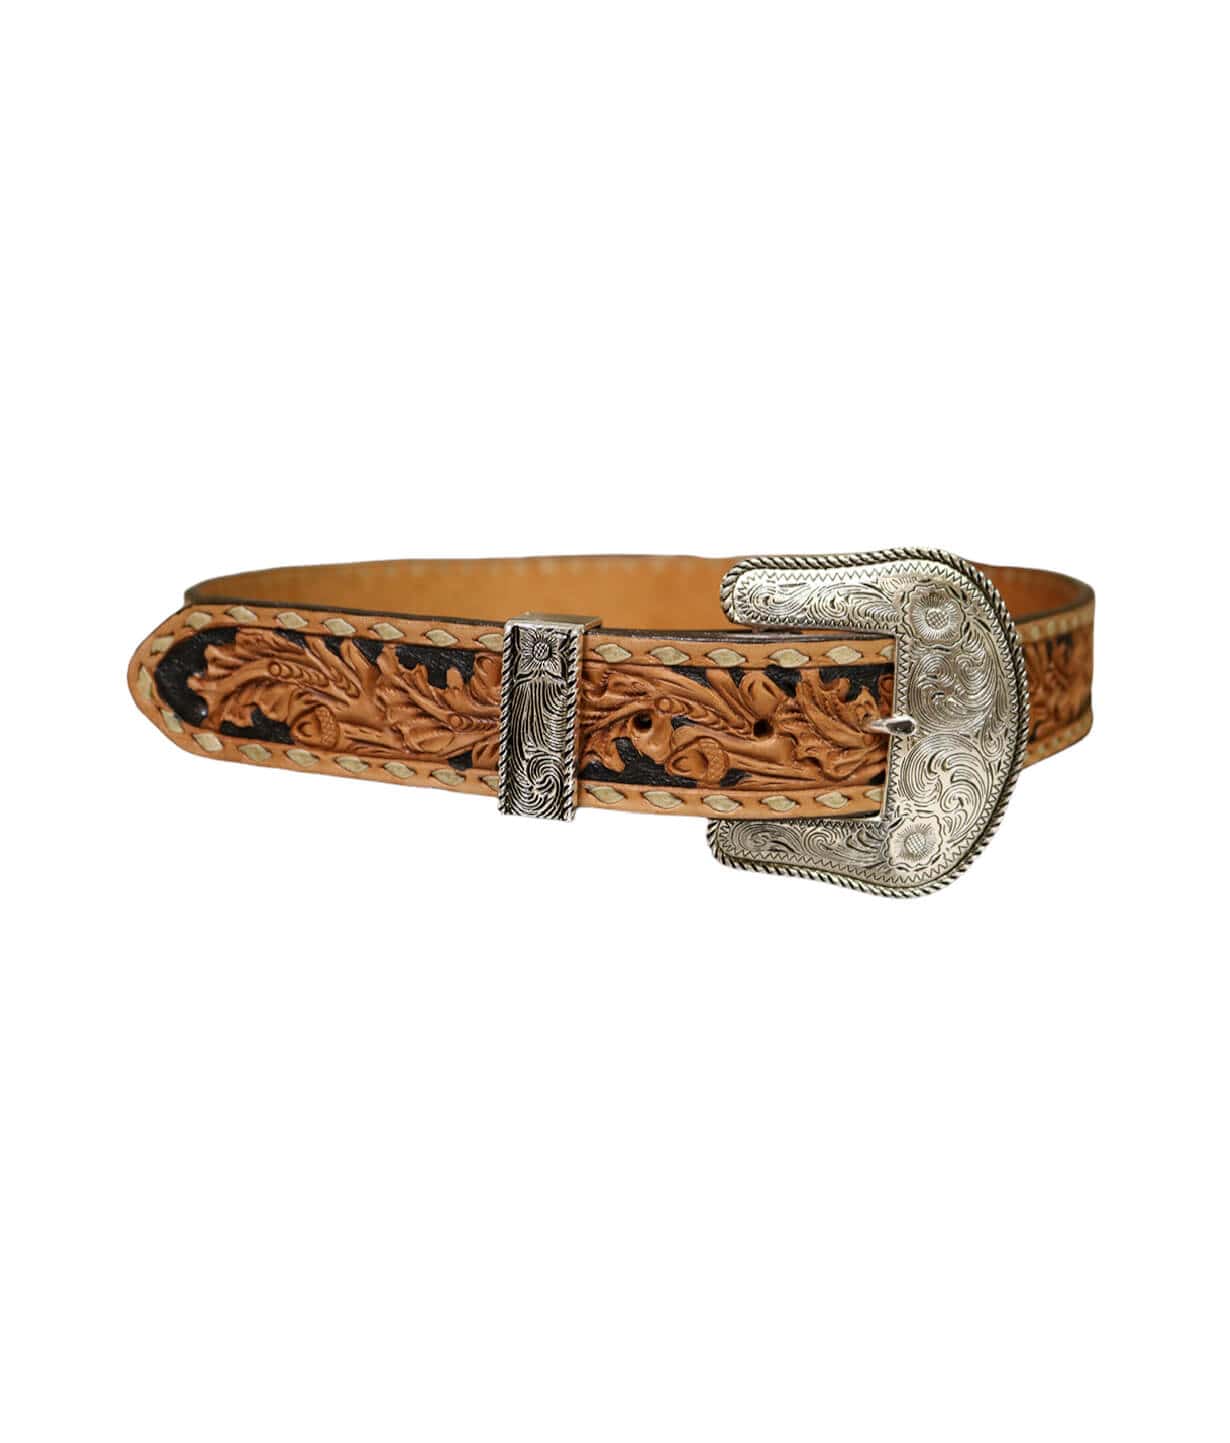 Alamo Saddlery Belts 1.5" straight belt golden leather mini acorn tooling w/ background paint & buckstitch